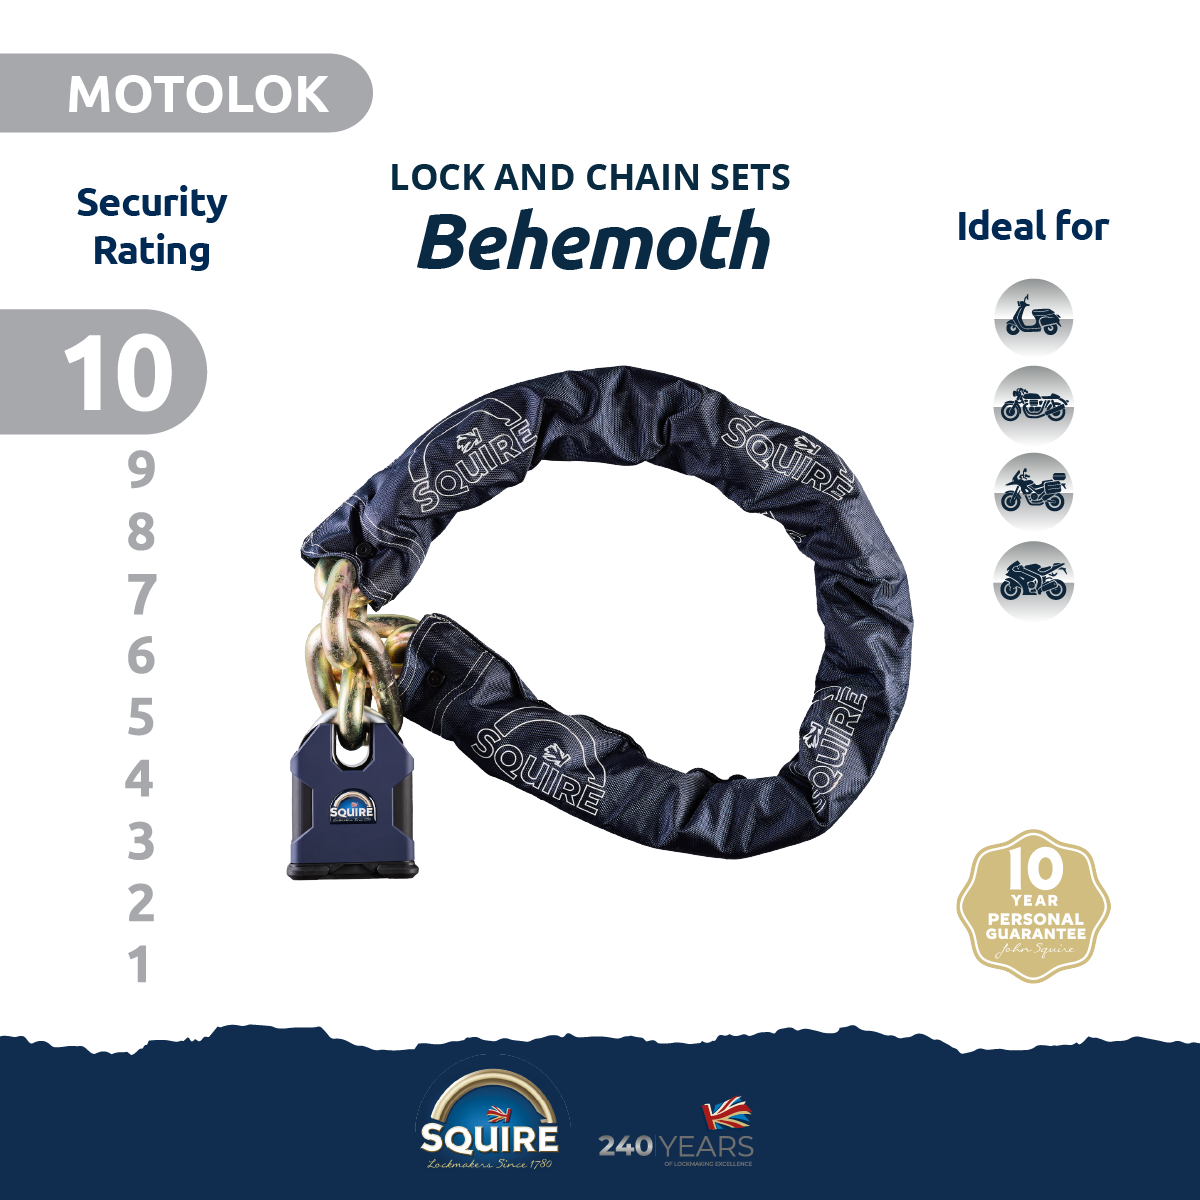 Behemoth Padlock and Chain – Squire Locks